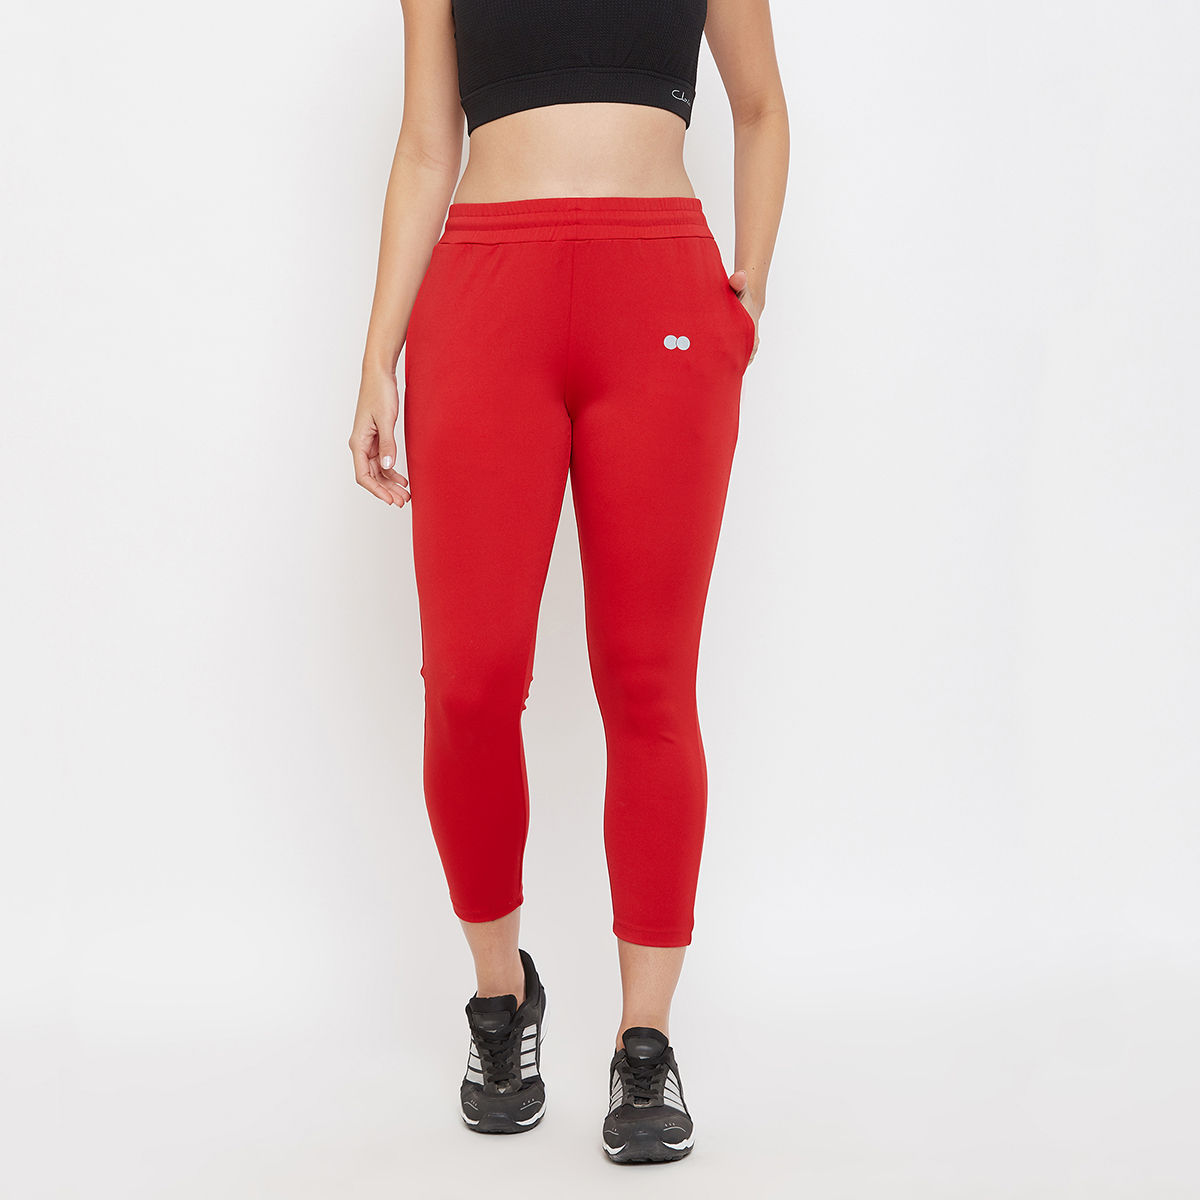 Women, Redbat crop top and tights